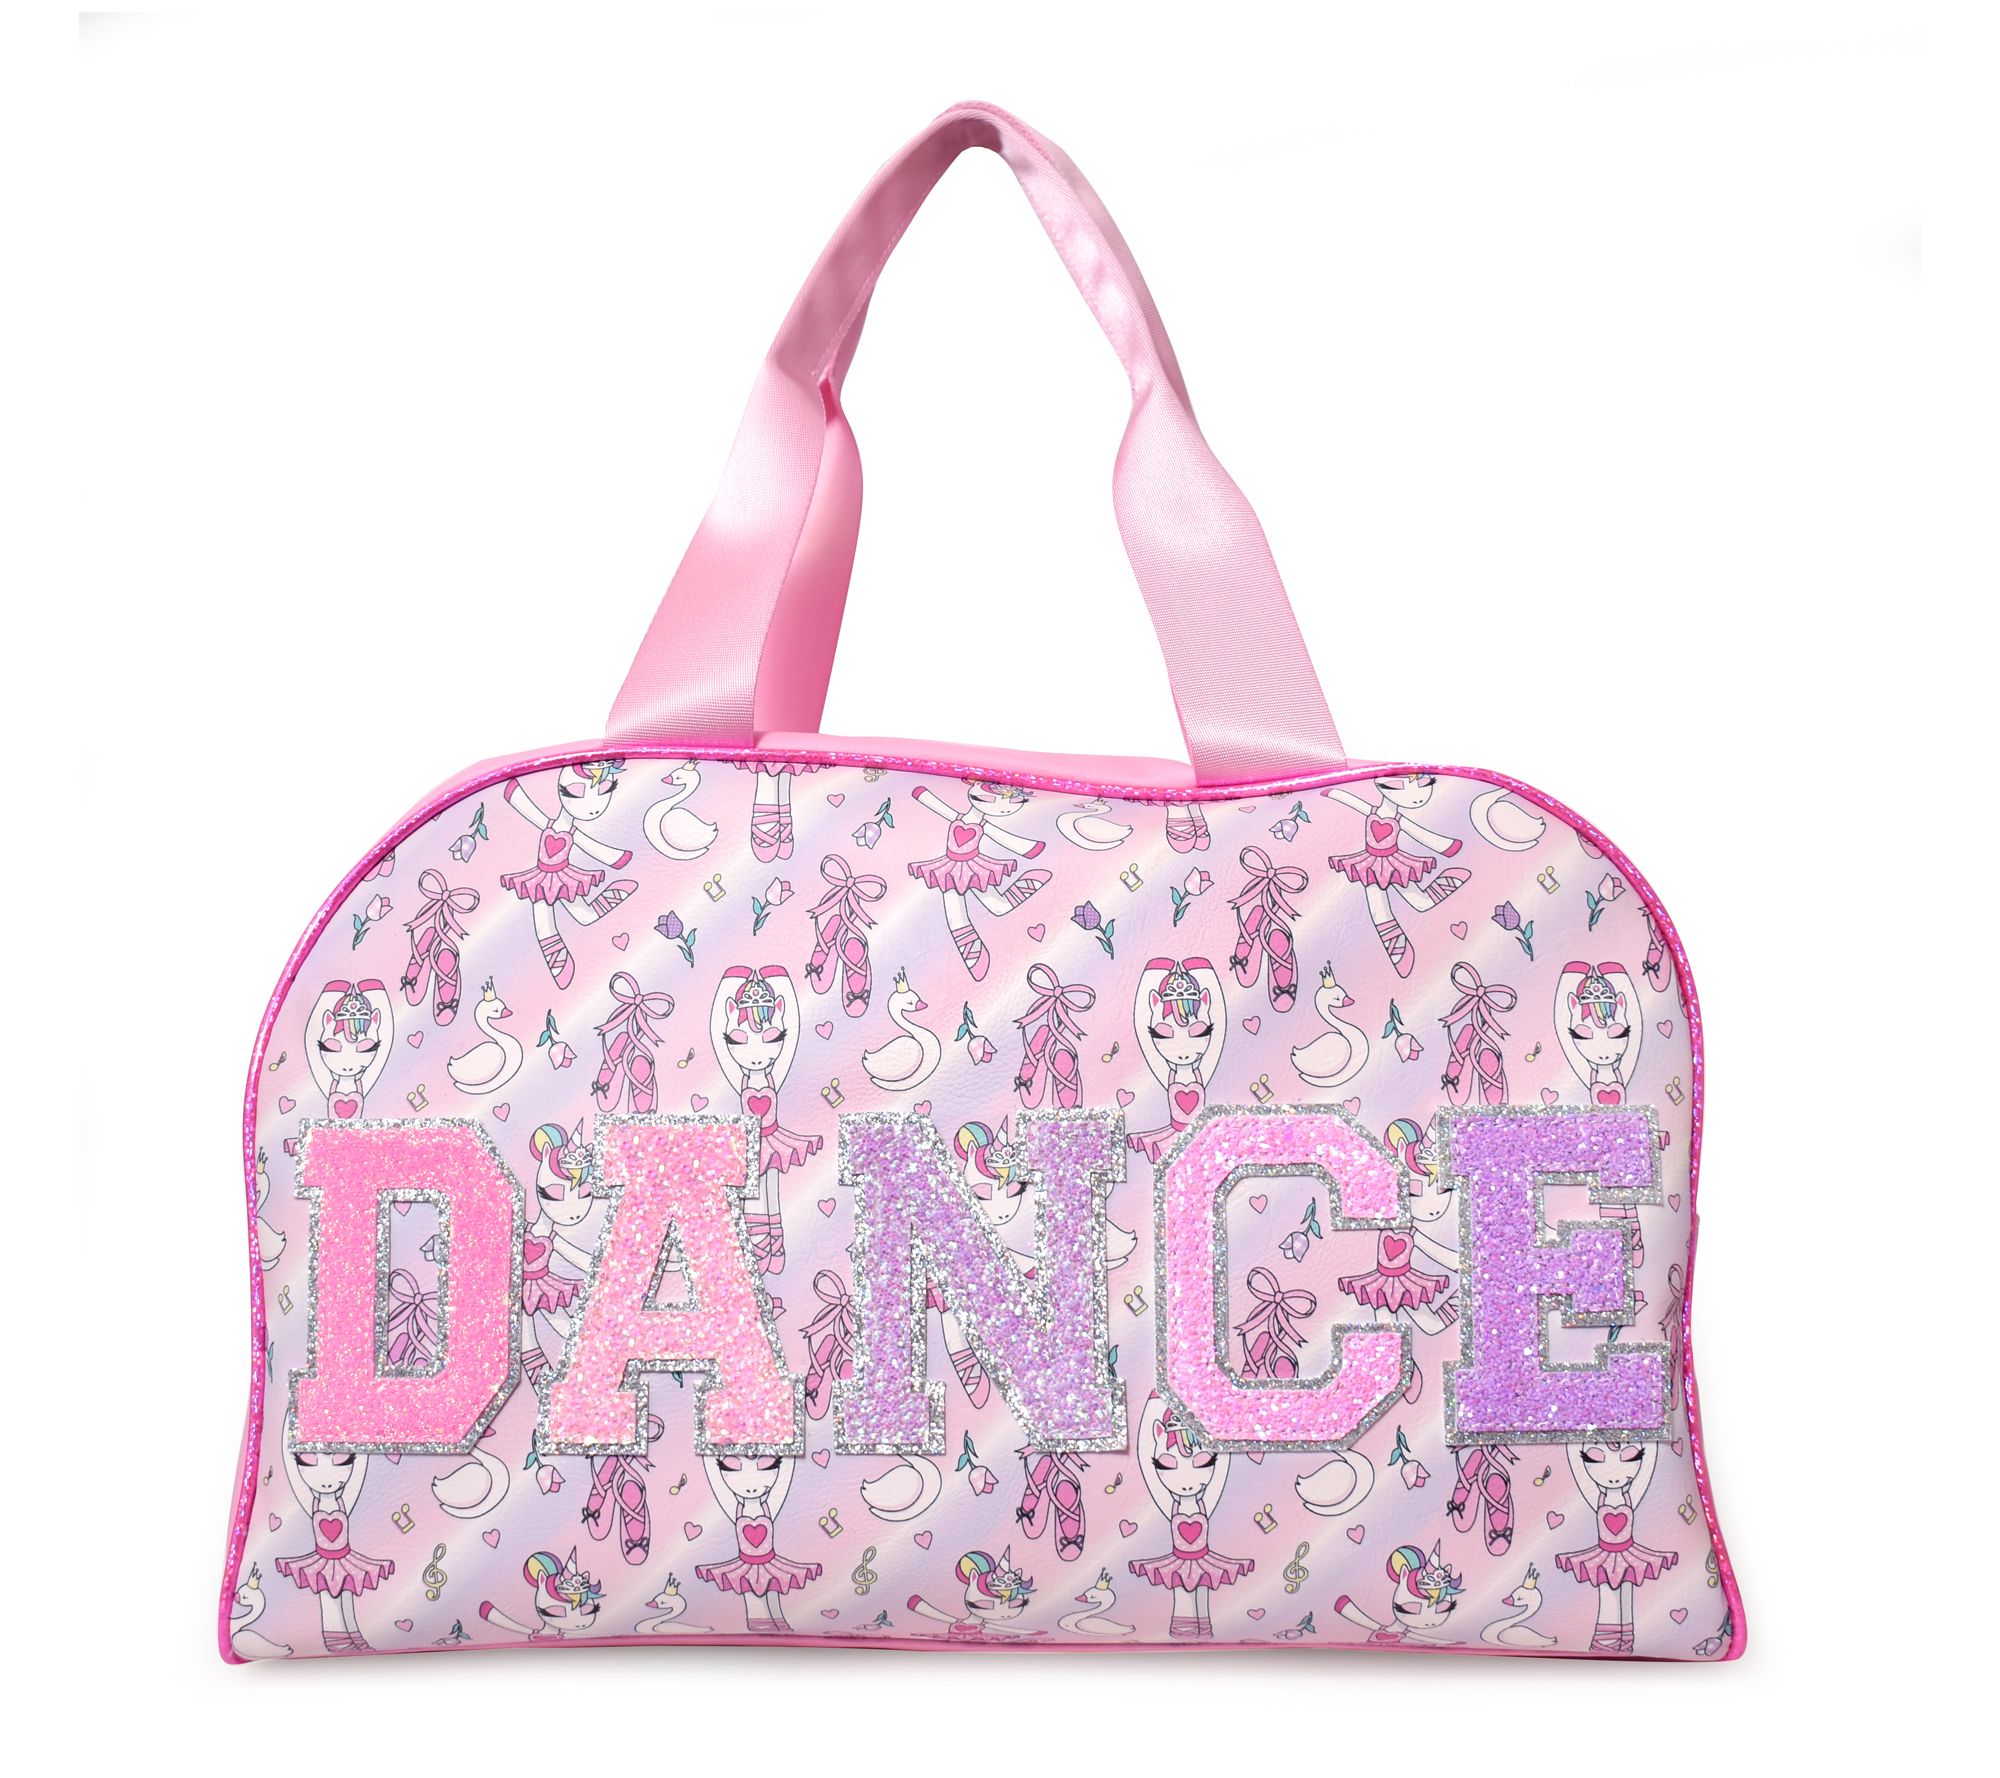 OMG Accessories Dance Medium Duffle Bag - QVC.com